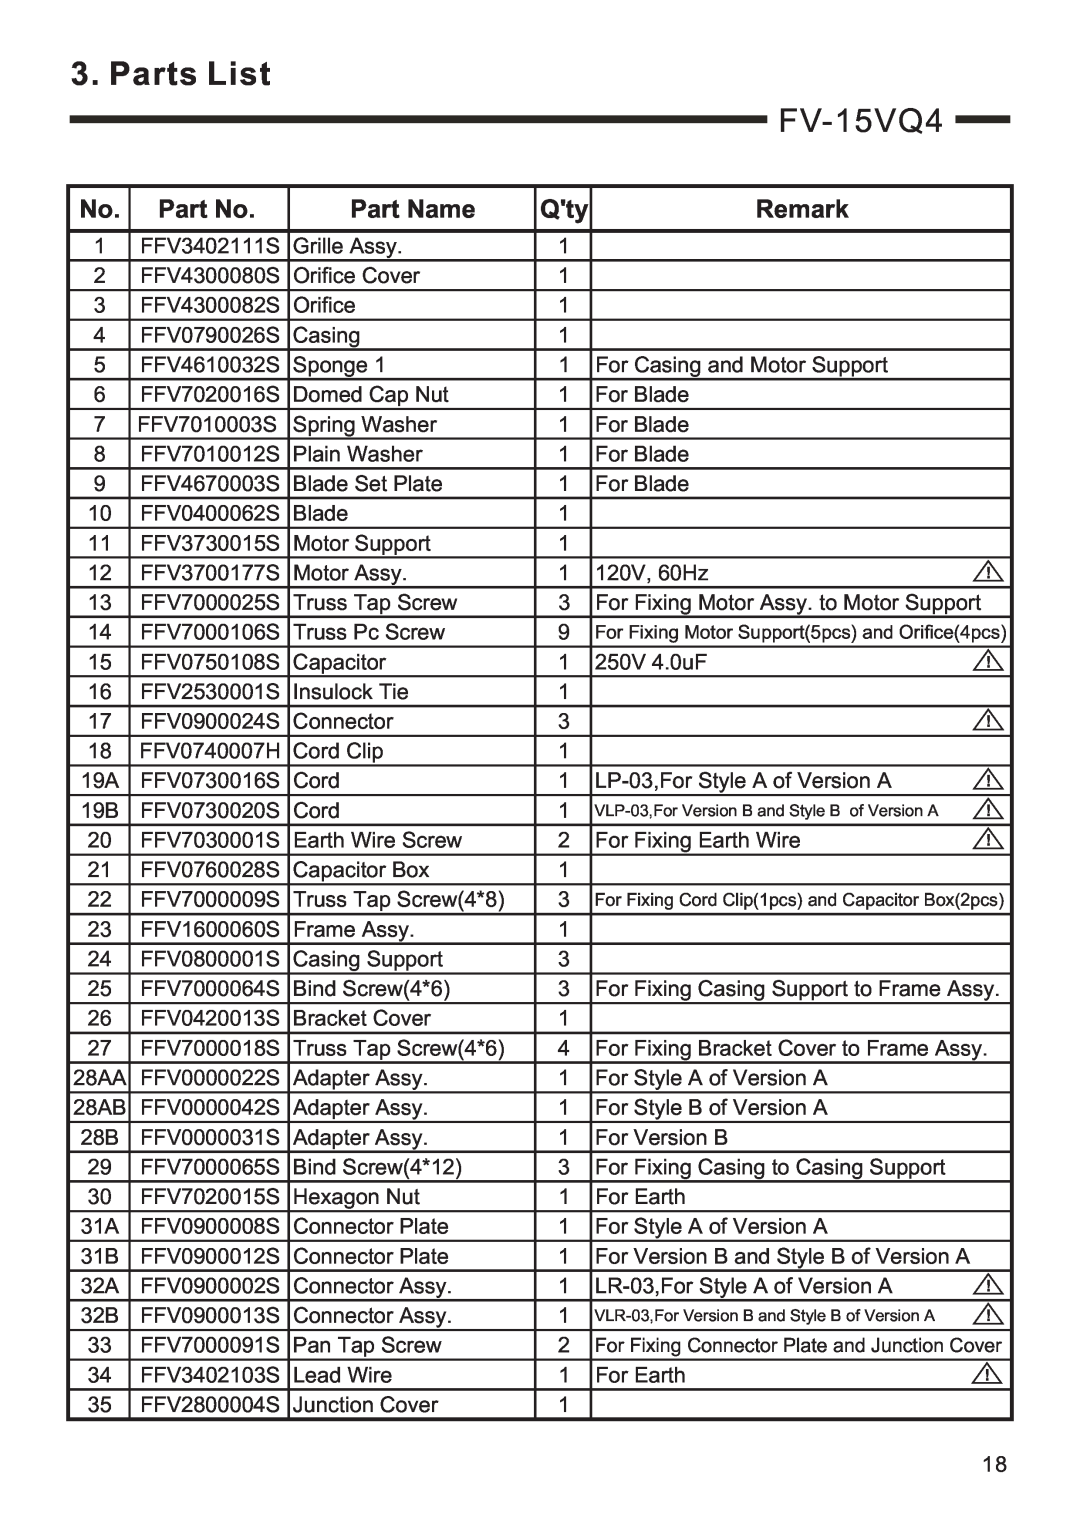 Panasonic FV-05VQ3, FV-11VQ3, FV-08VQ3 service manual Parts List, FV-15VQ4, Part Name, Remark 